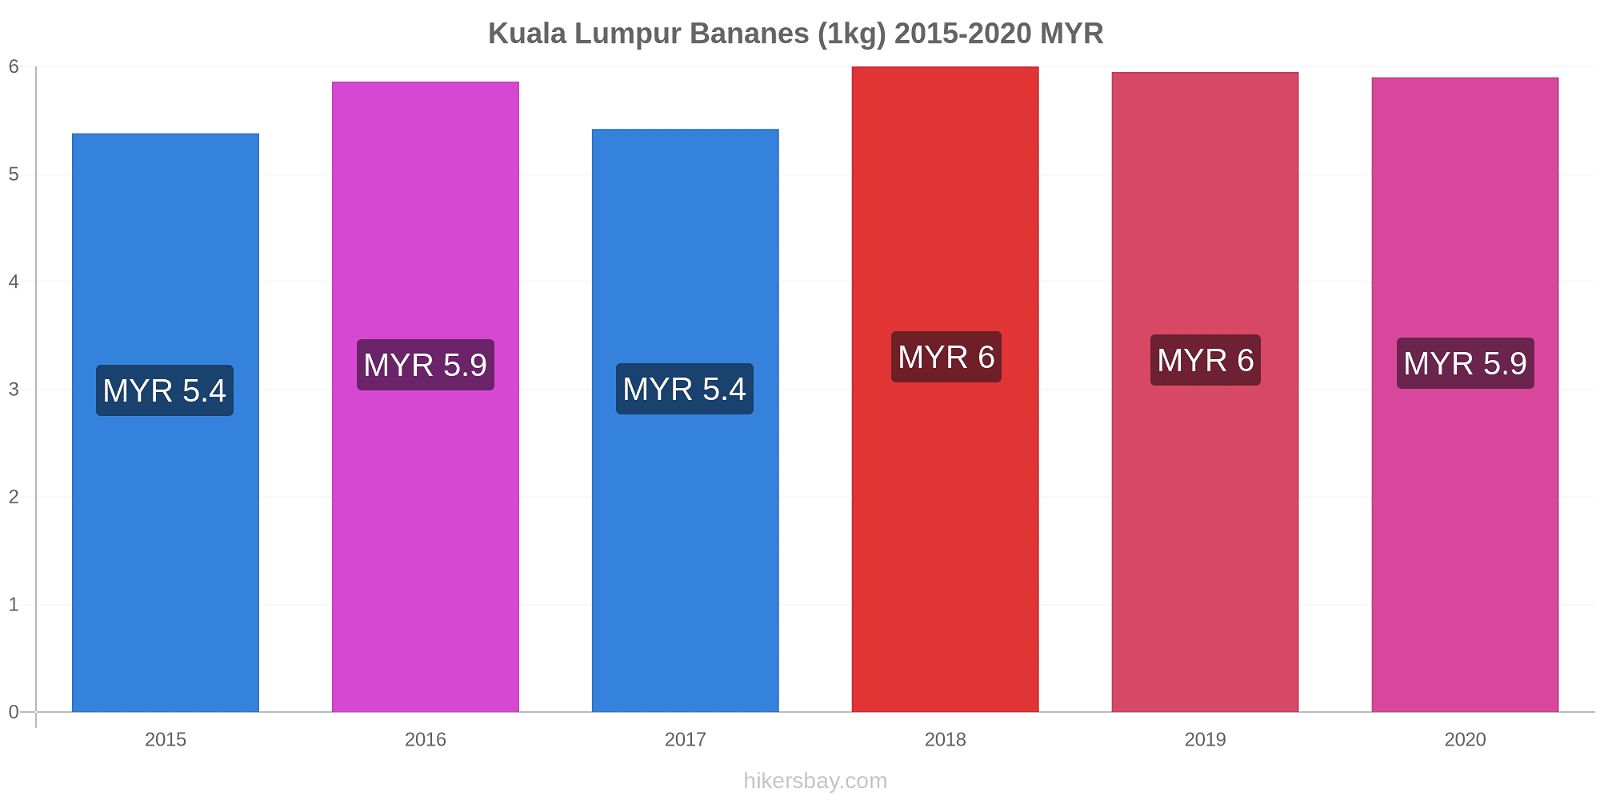 Kuala Lumpur changements de prix Bananes (1kg) hikersbay.com